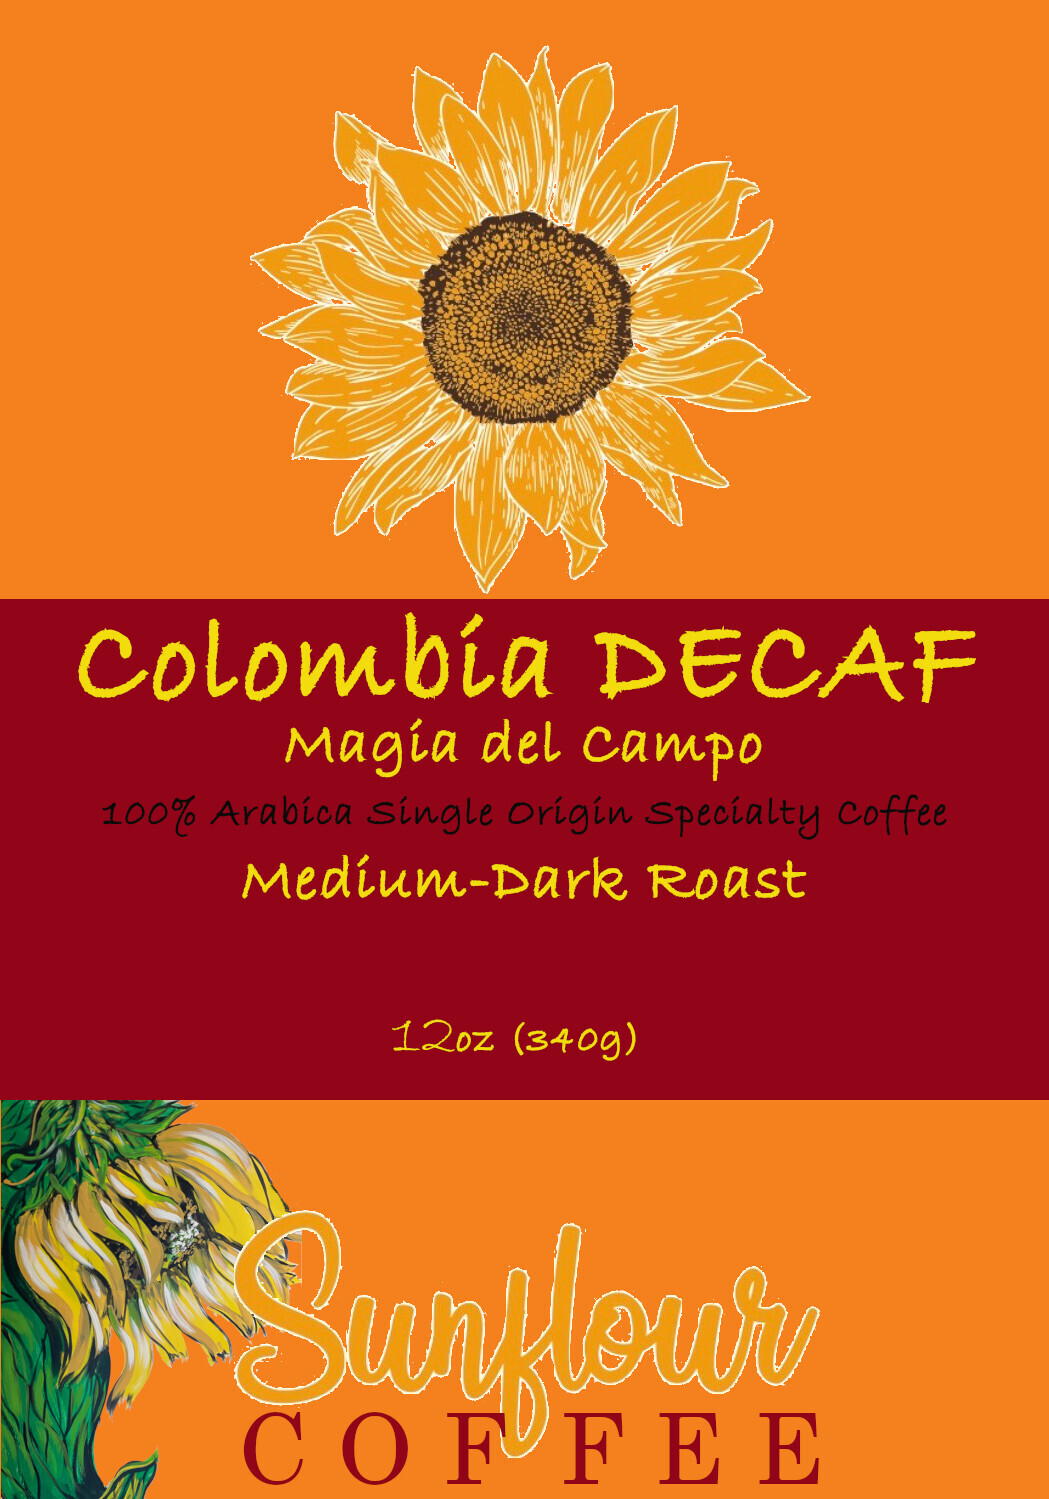 Decaf Colombia Magia del Campo